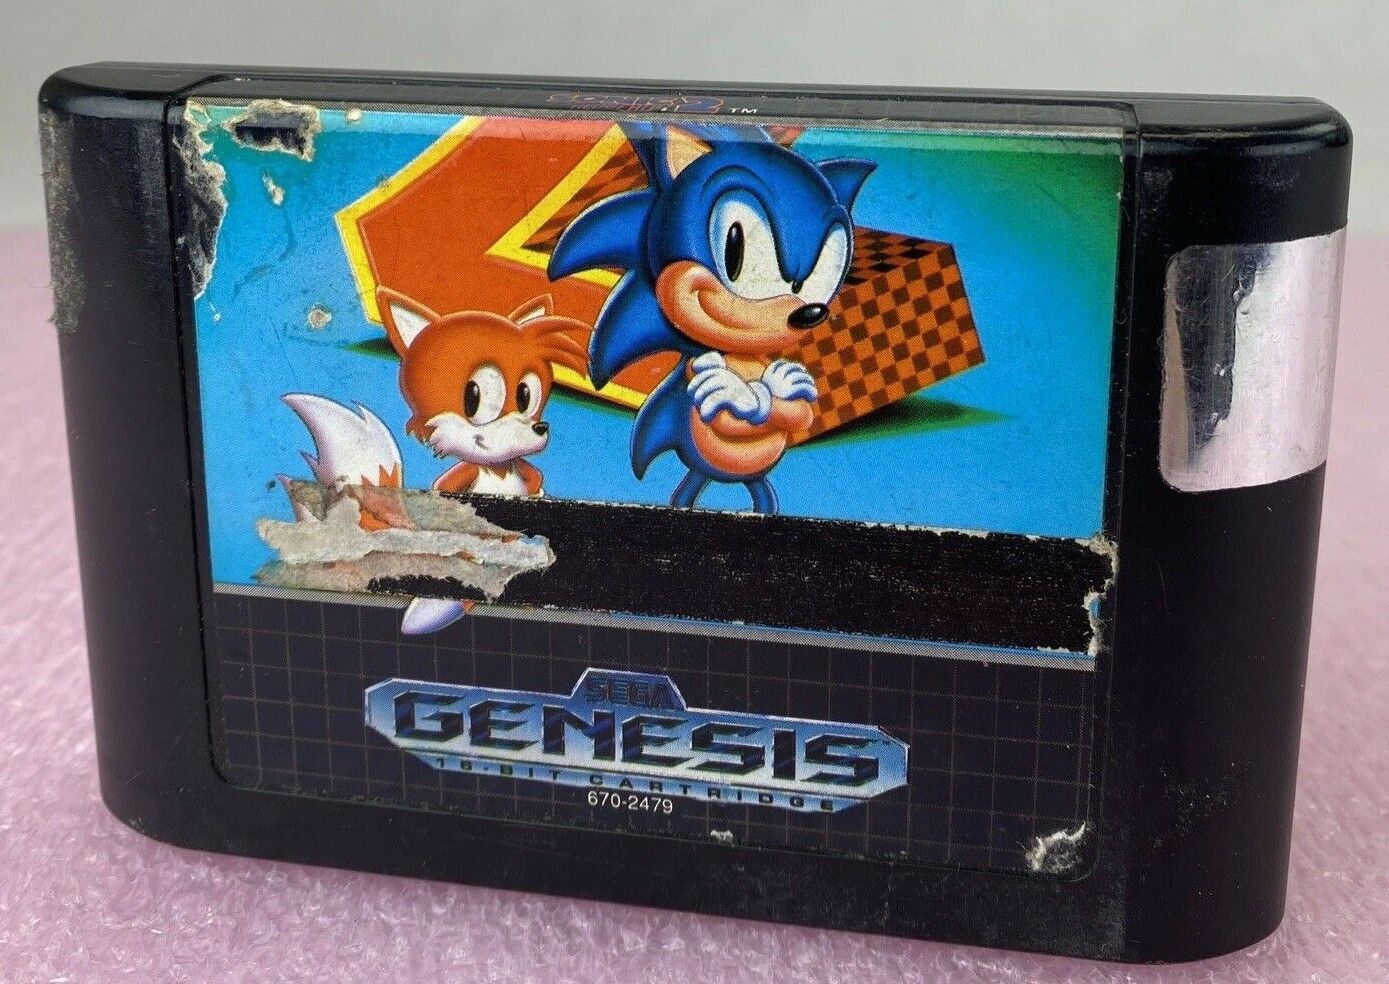 Sonic The Hedgehog 2 for Sega Genesis cartridge only